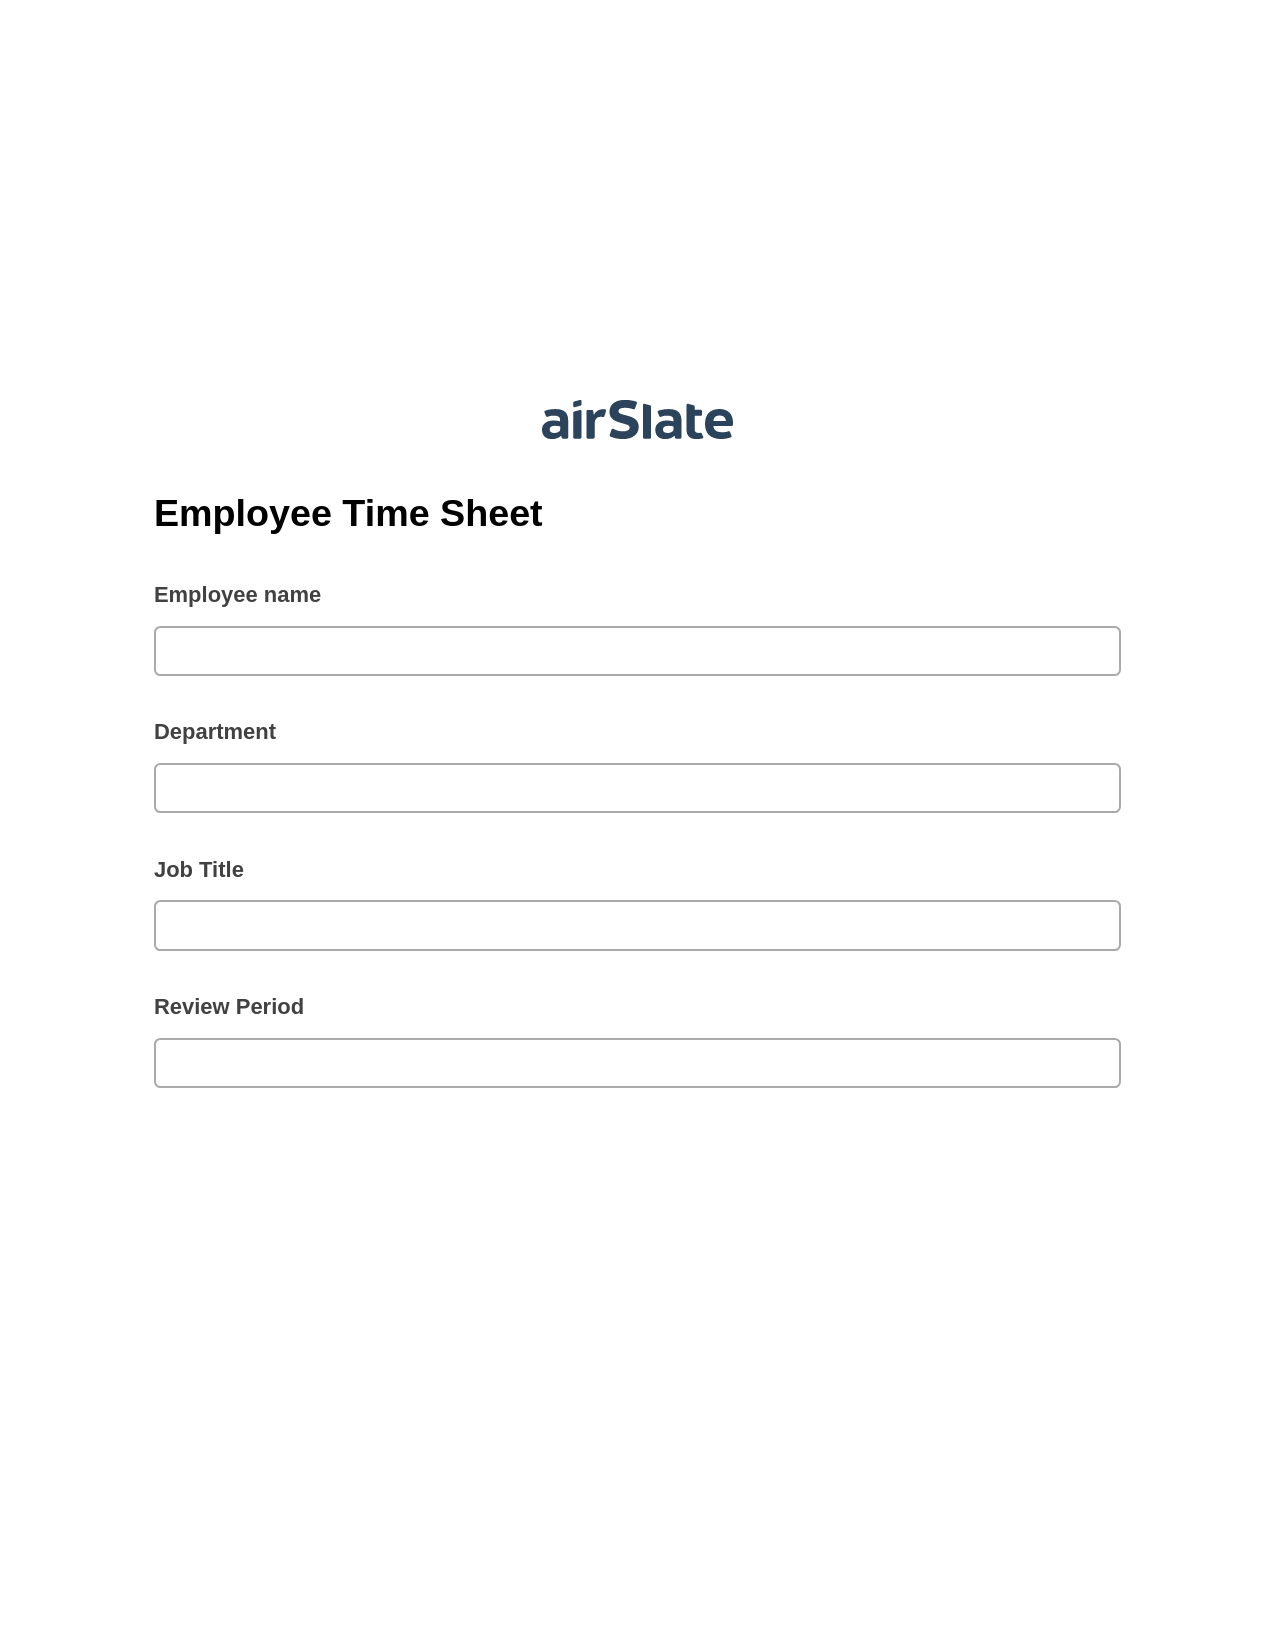 Multirole Employee Time Sheet Pre-fill from Excel Spreadsheet Bot, Custom Field's Value Bot, Export to Smartsheet